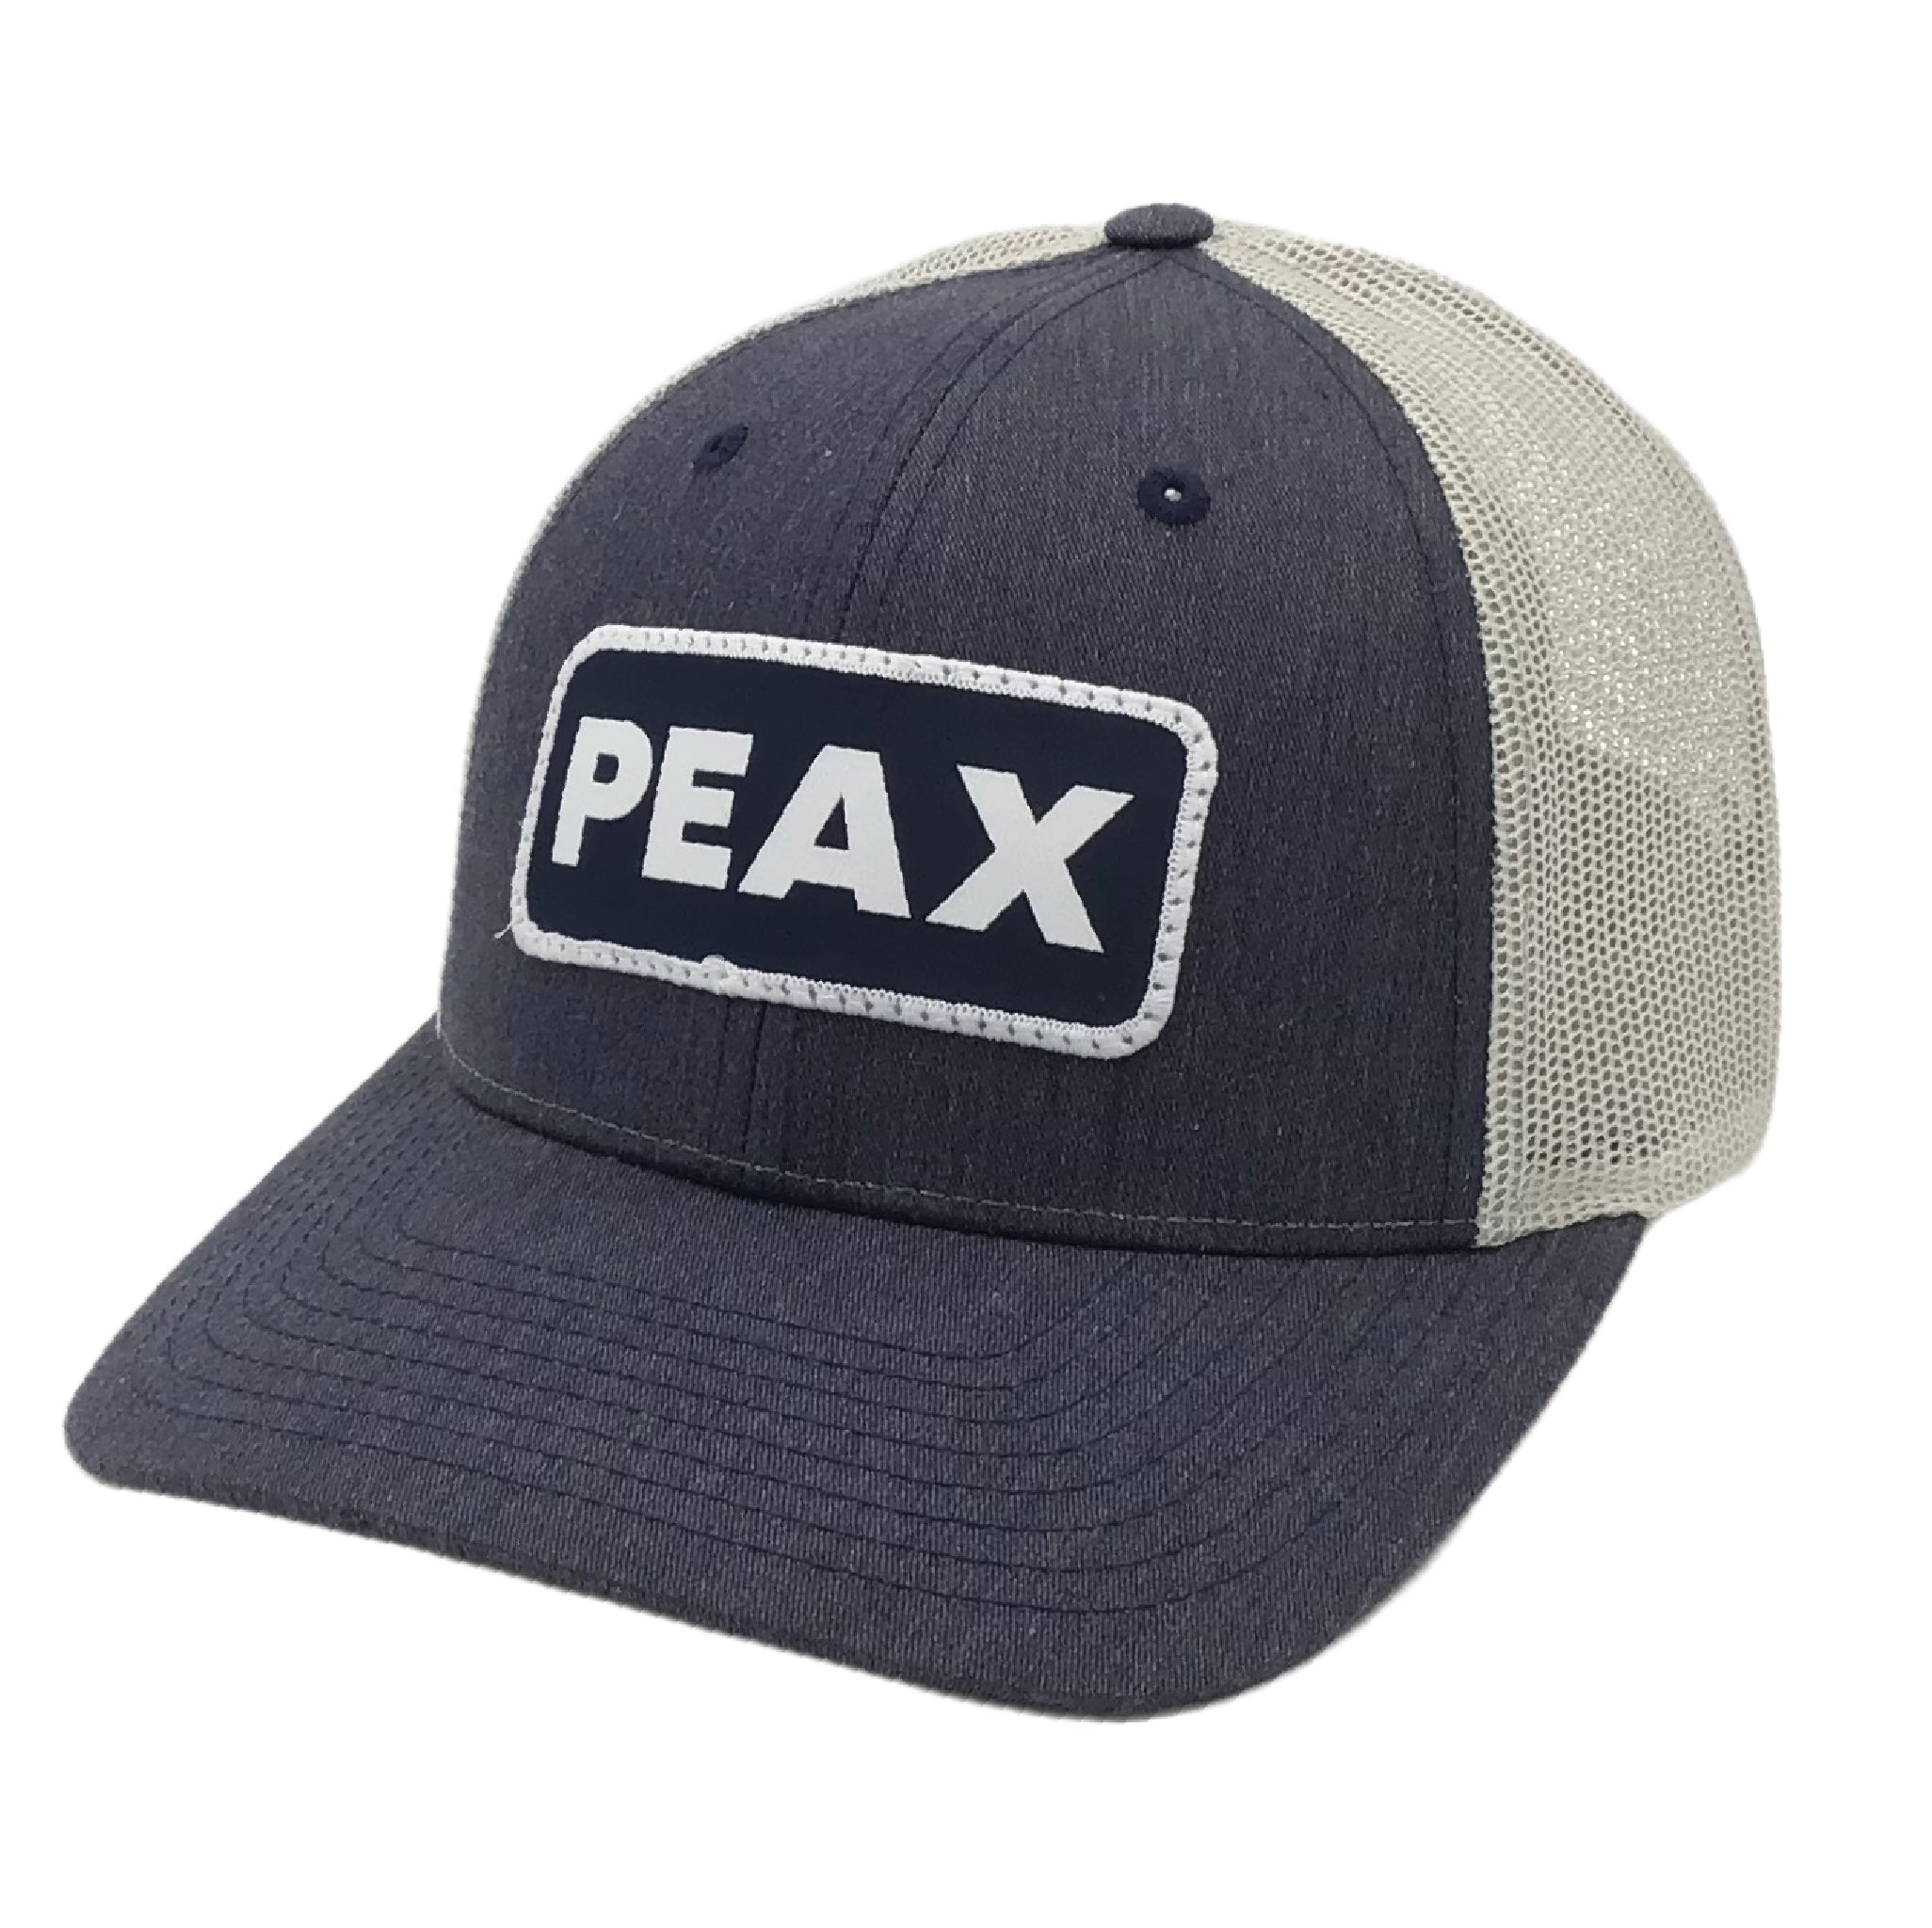 PEAX PATCH HAT